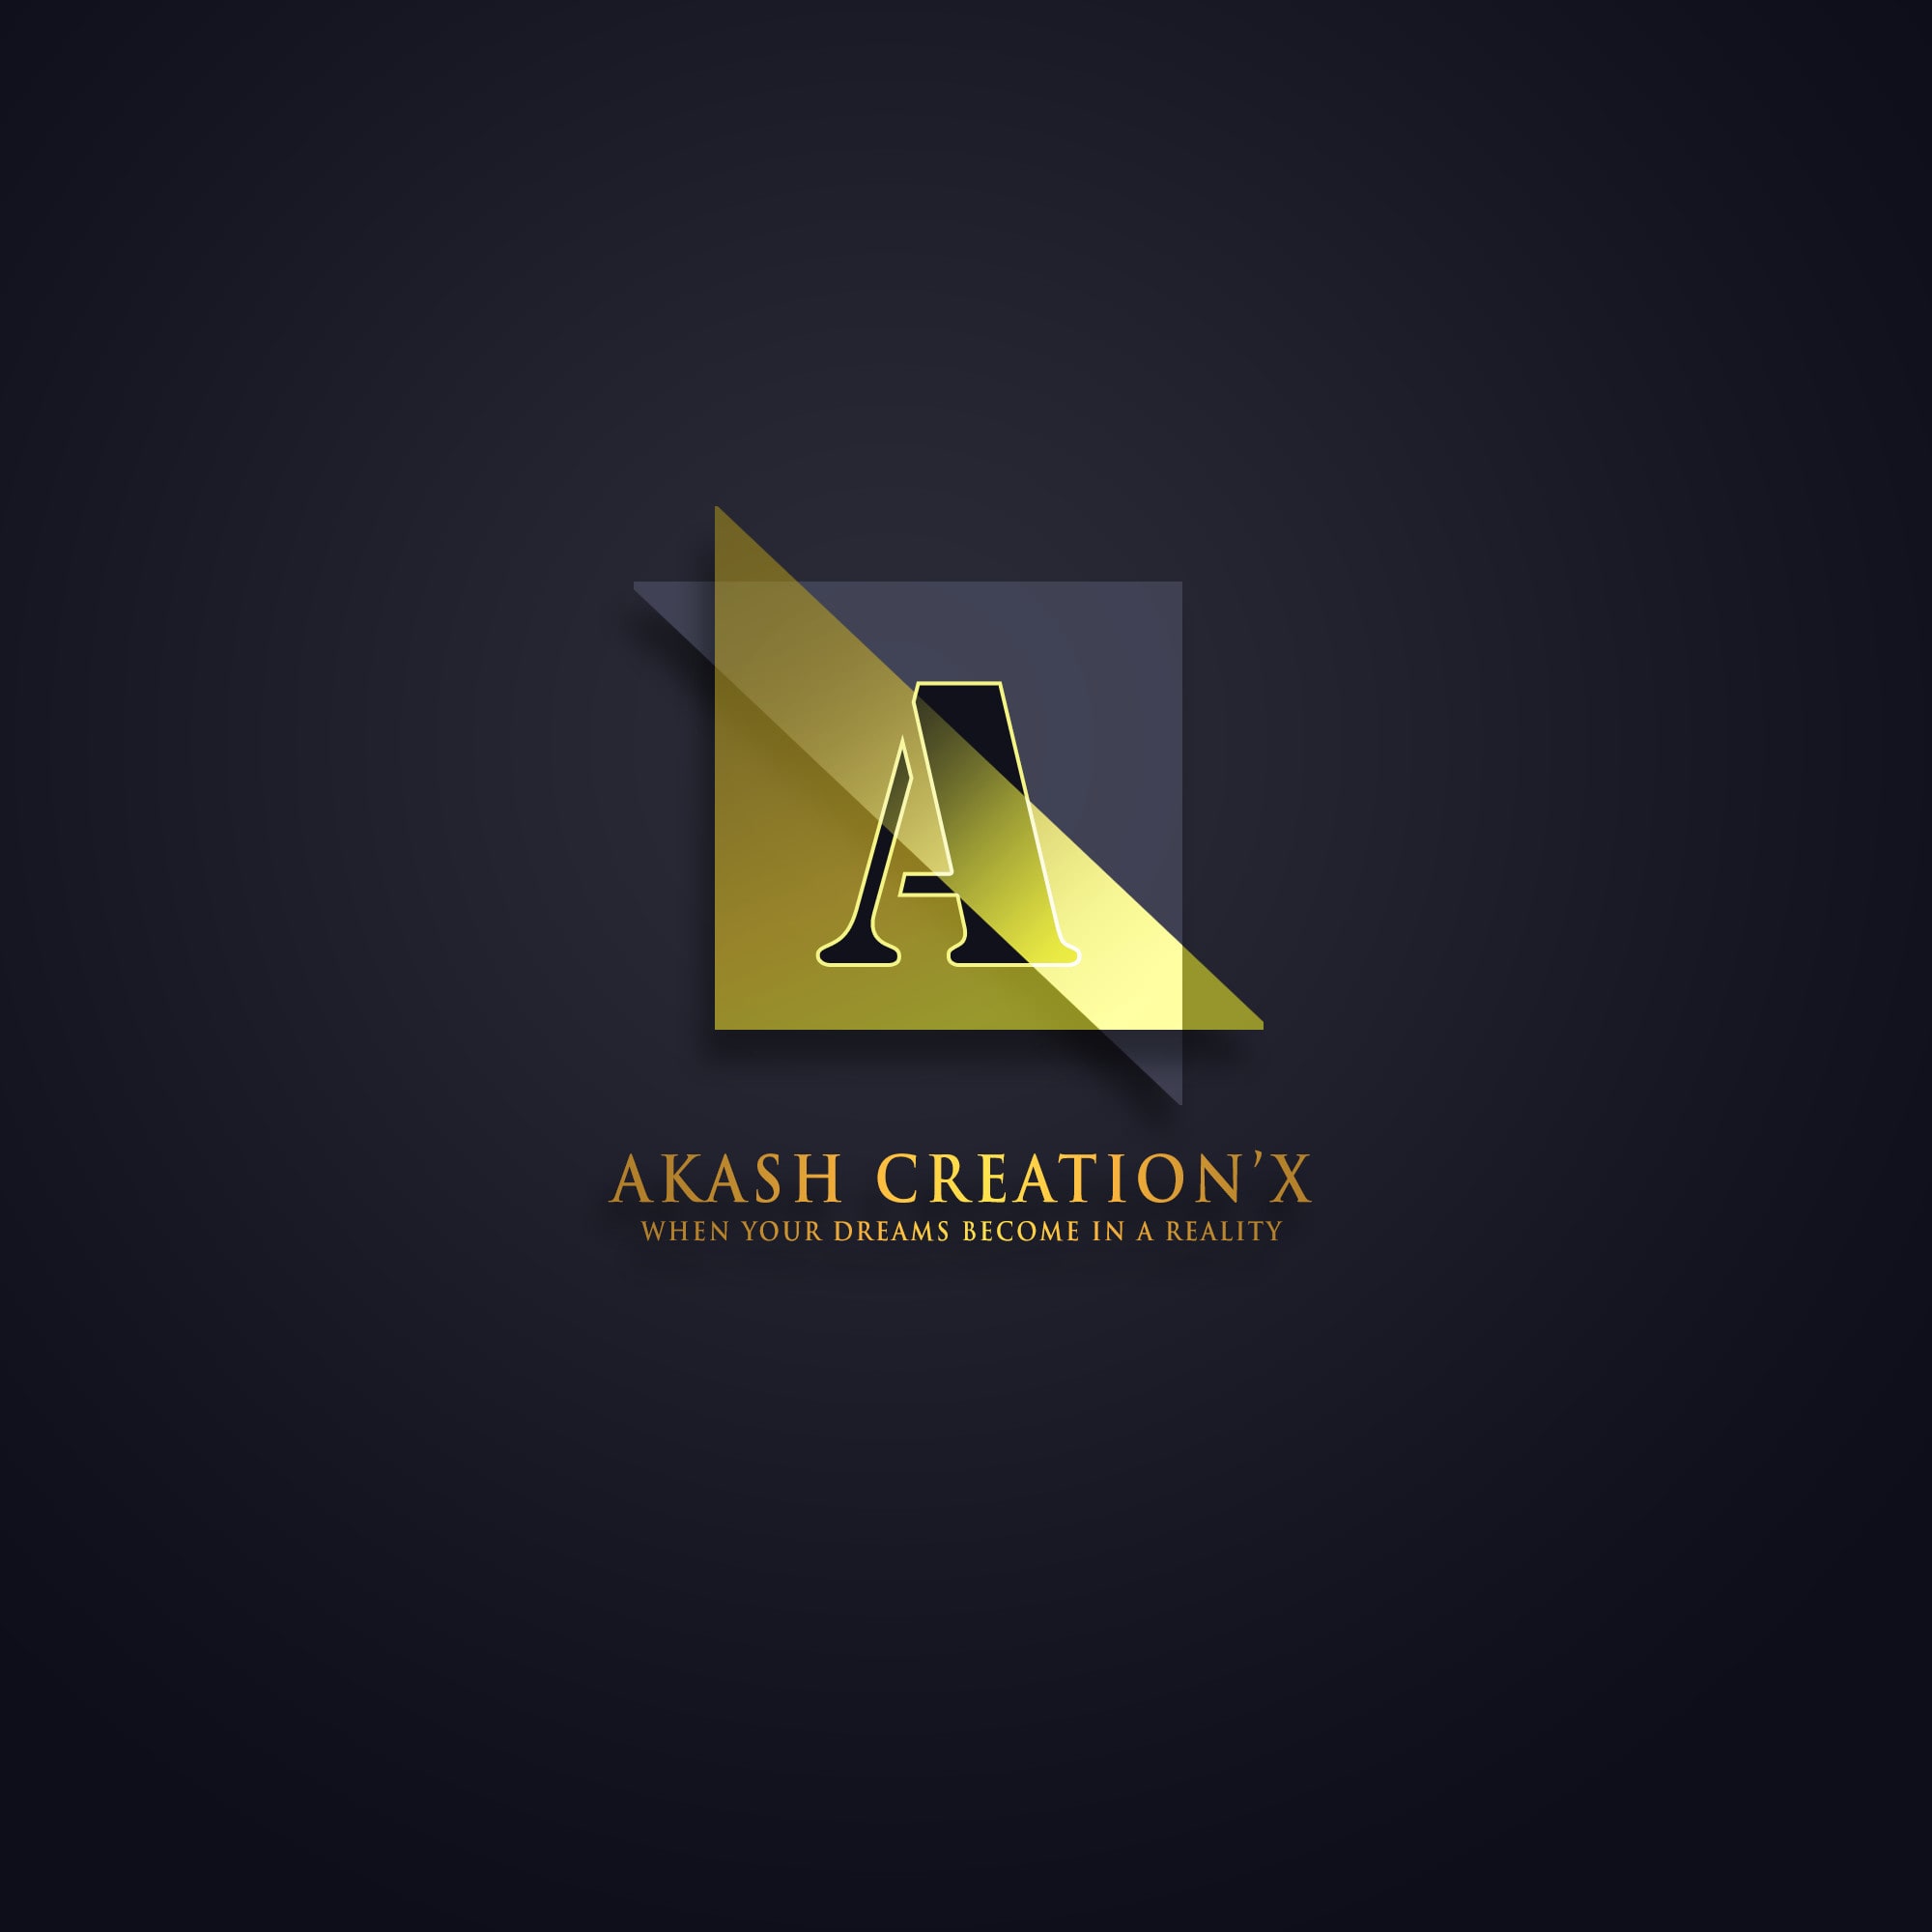 Akash Creation - Akash Creation updated their cover photo.